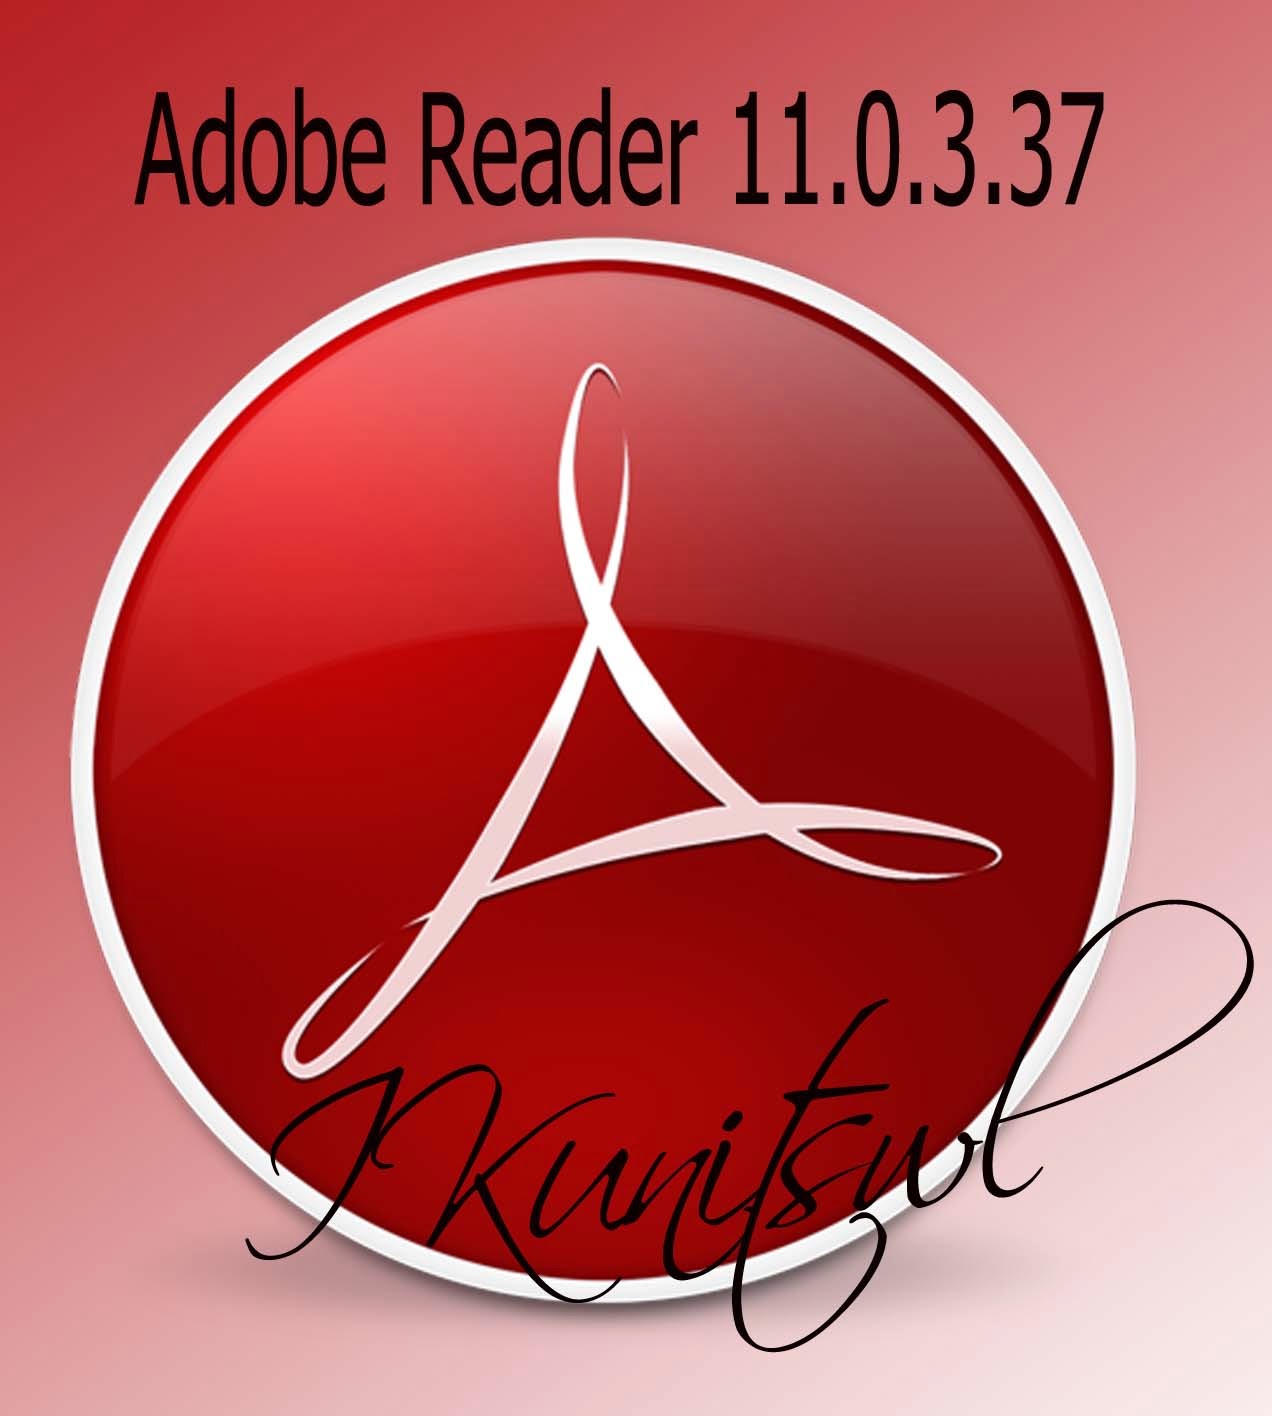 adobe reader 2010 free download windows 7